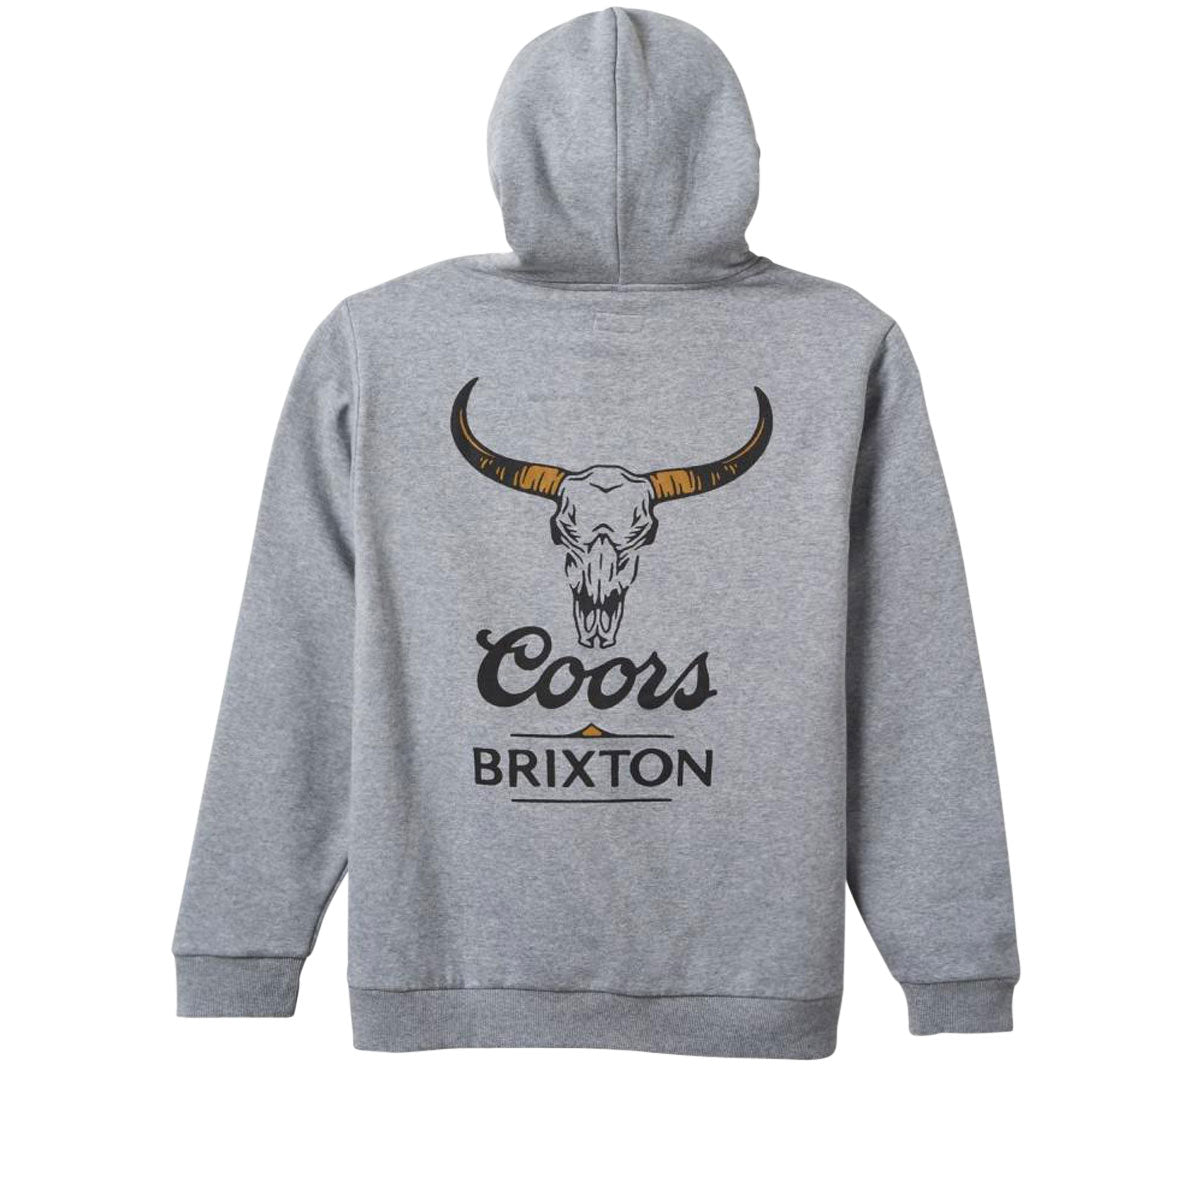 Brixton x Coors Bull Hoodie - Heather Grey image 1